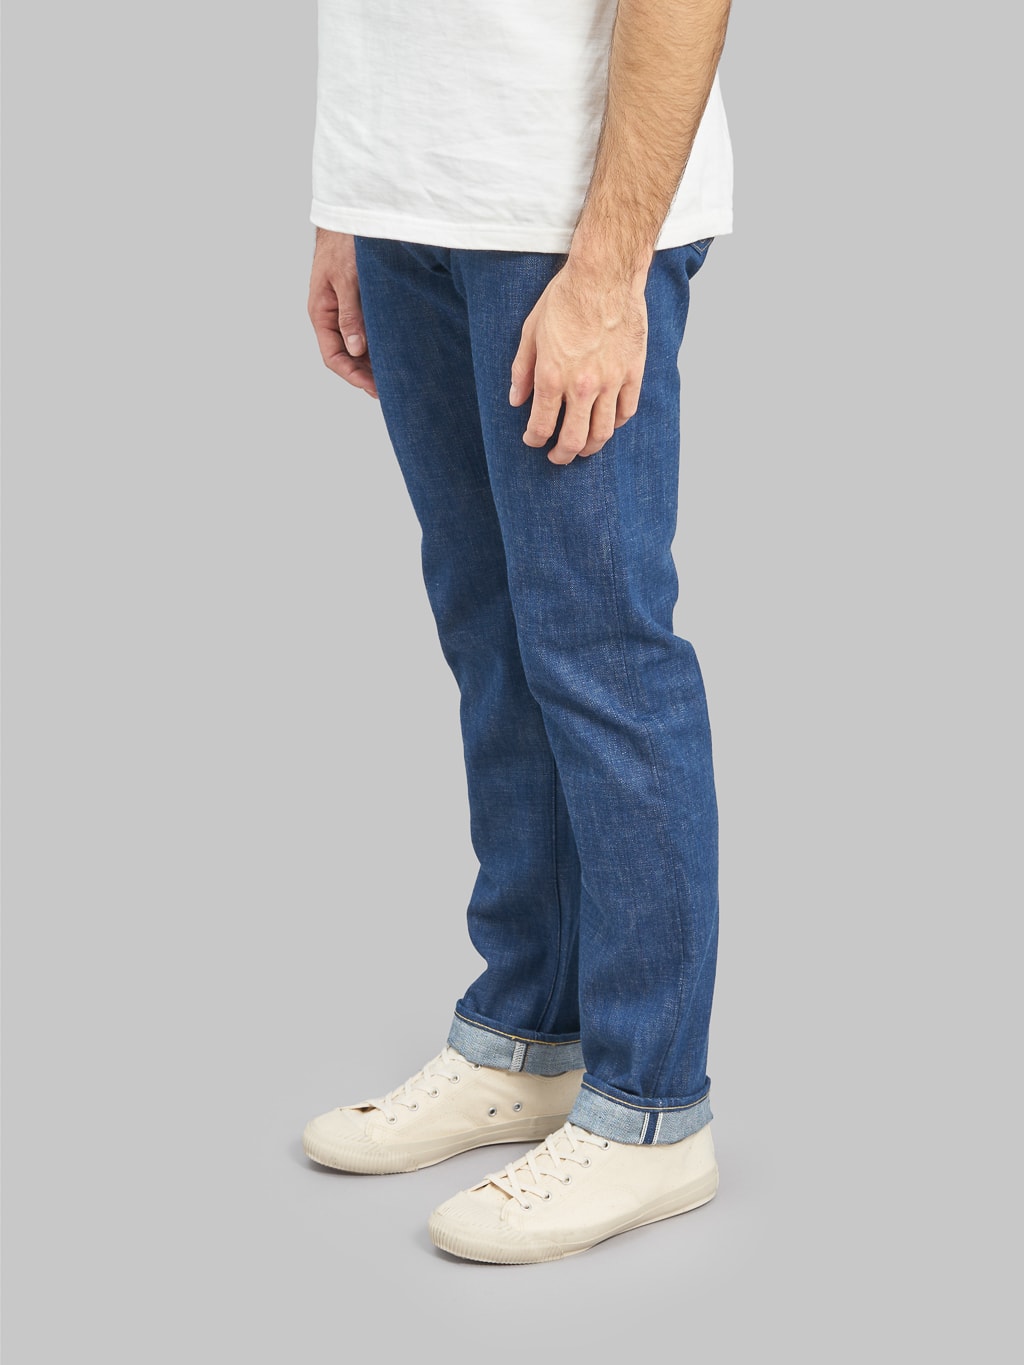 momotaro 0605 ai natural indigo dyed natural tapered denim jeans side fit